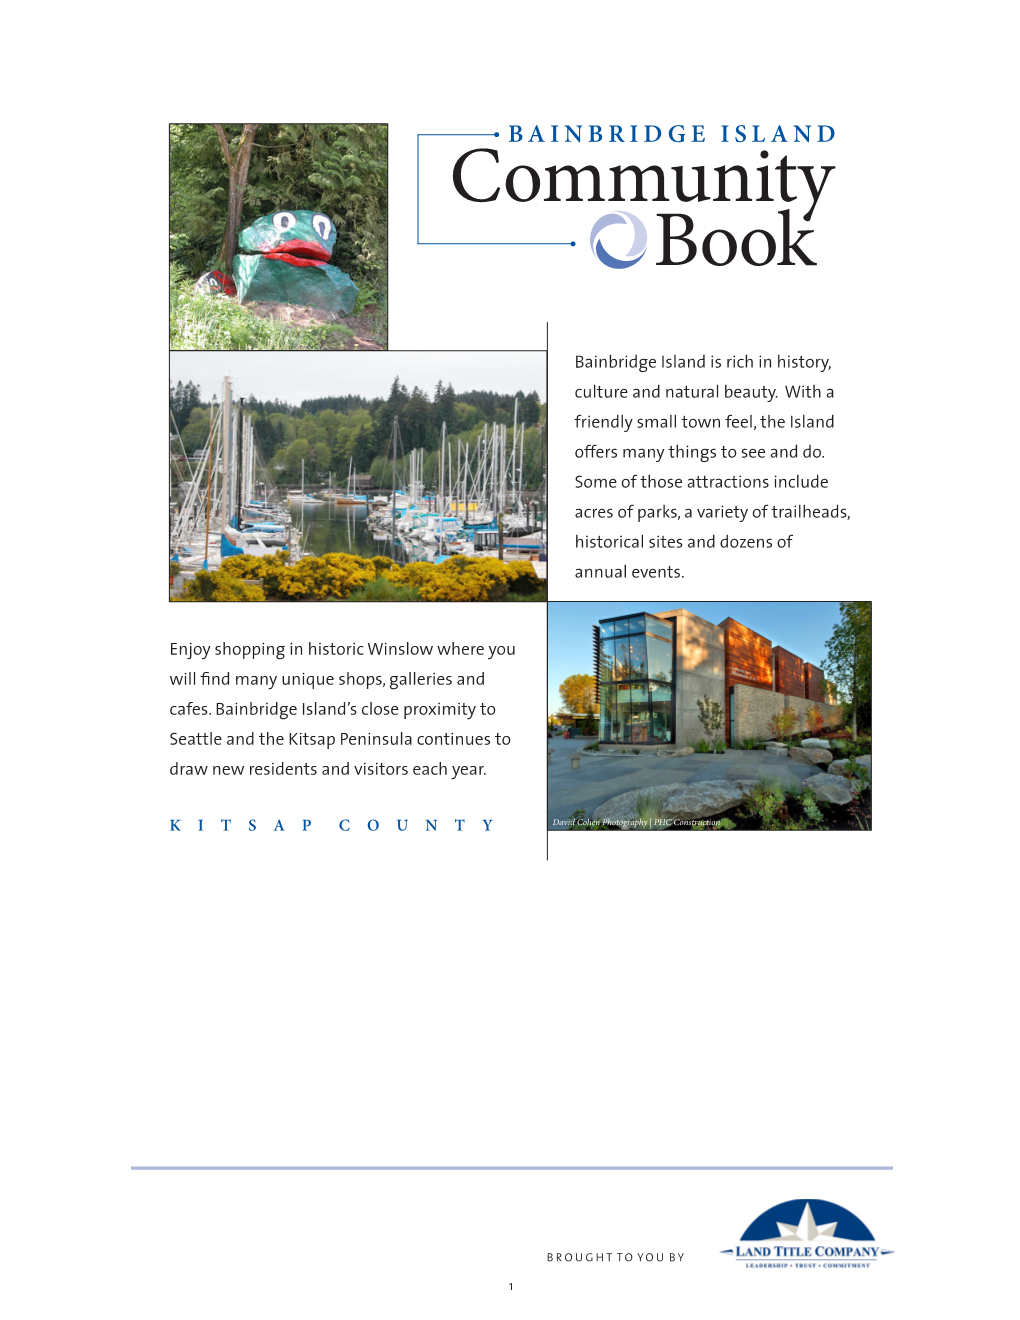 Community Book